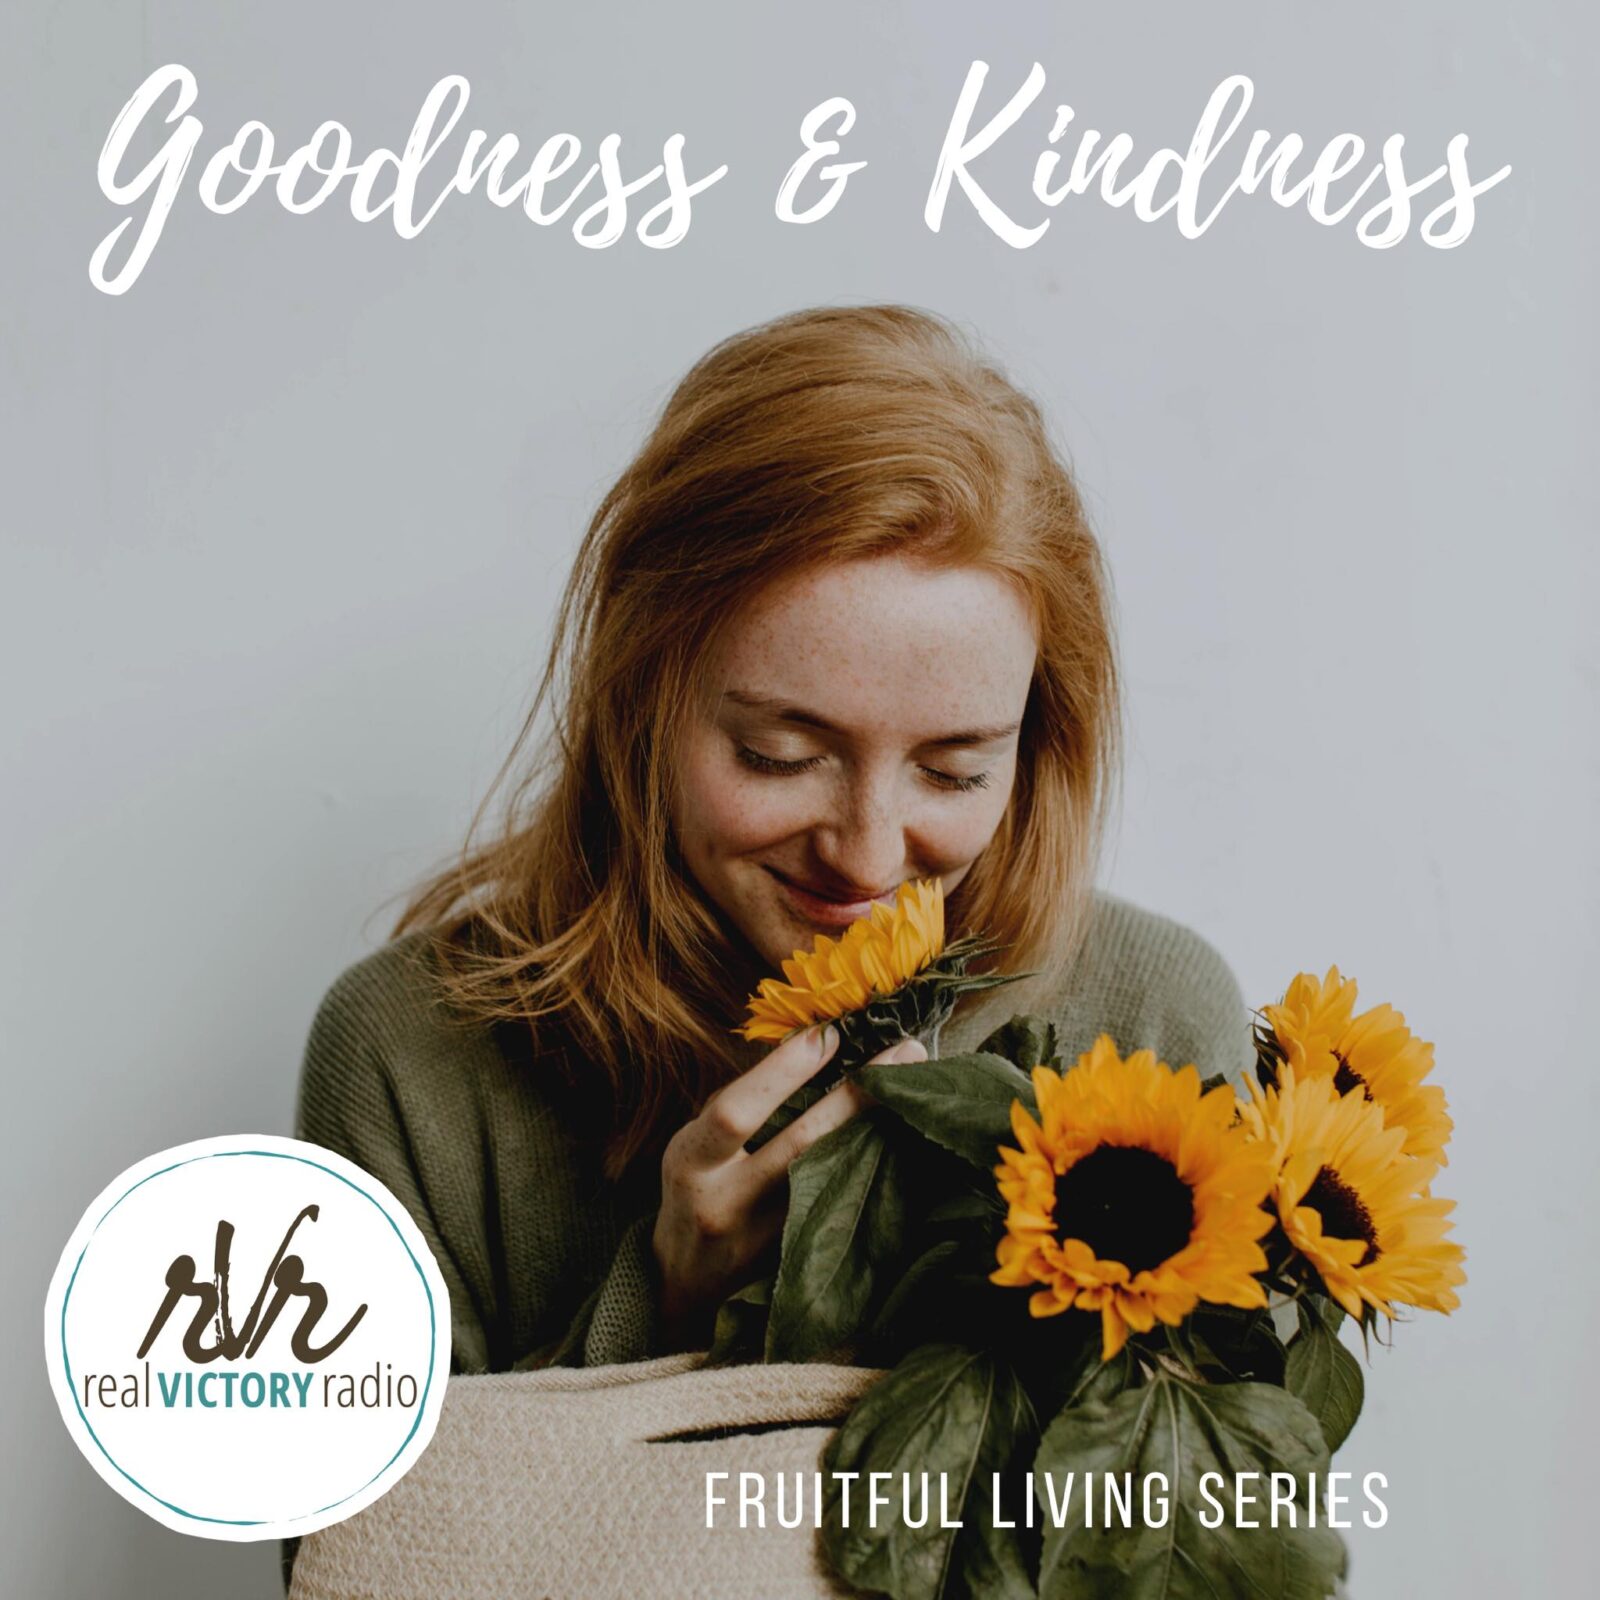 goodness kindness fruitful living